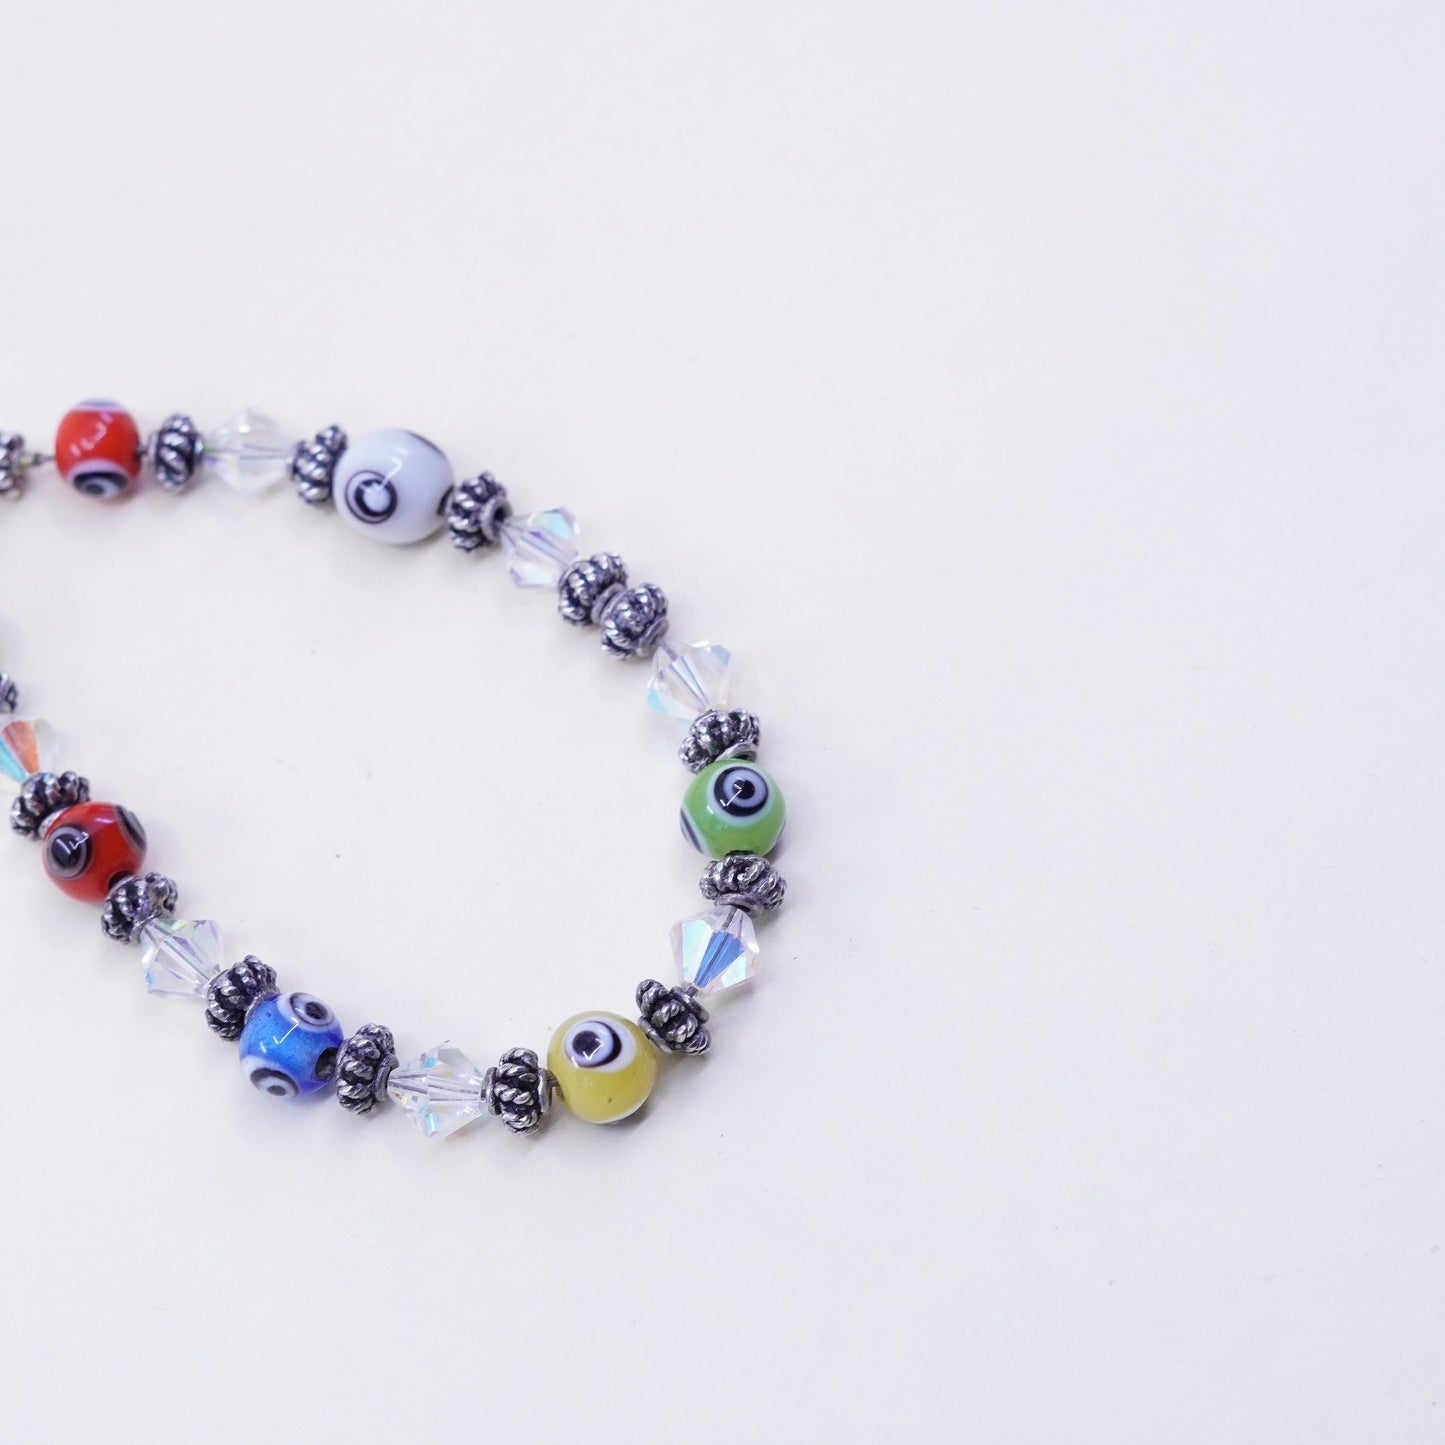 7”, handmade sterling silver bracelet, glass evil eye beads and heart closure